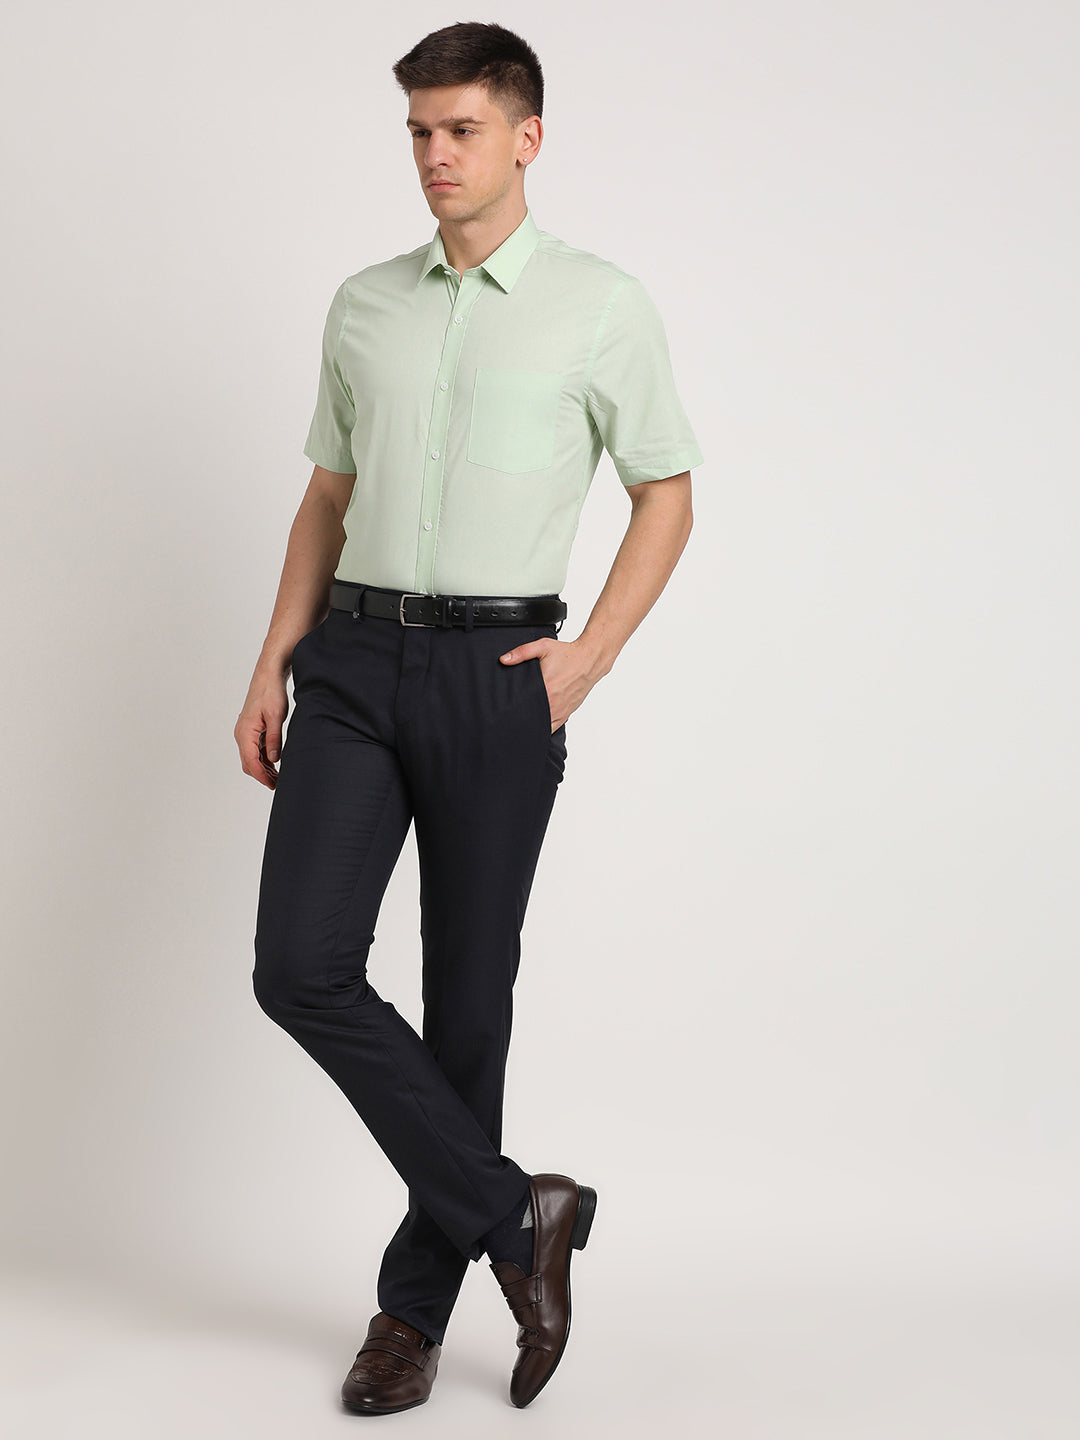 100% Cotton Mint Green Plain Slim Fit Half Sleeve Formal Shirt